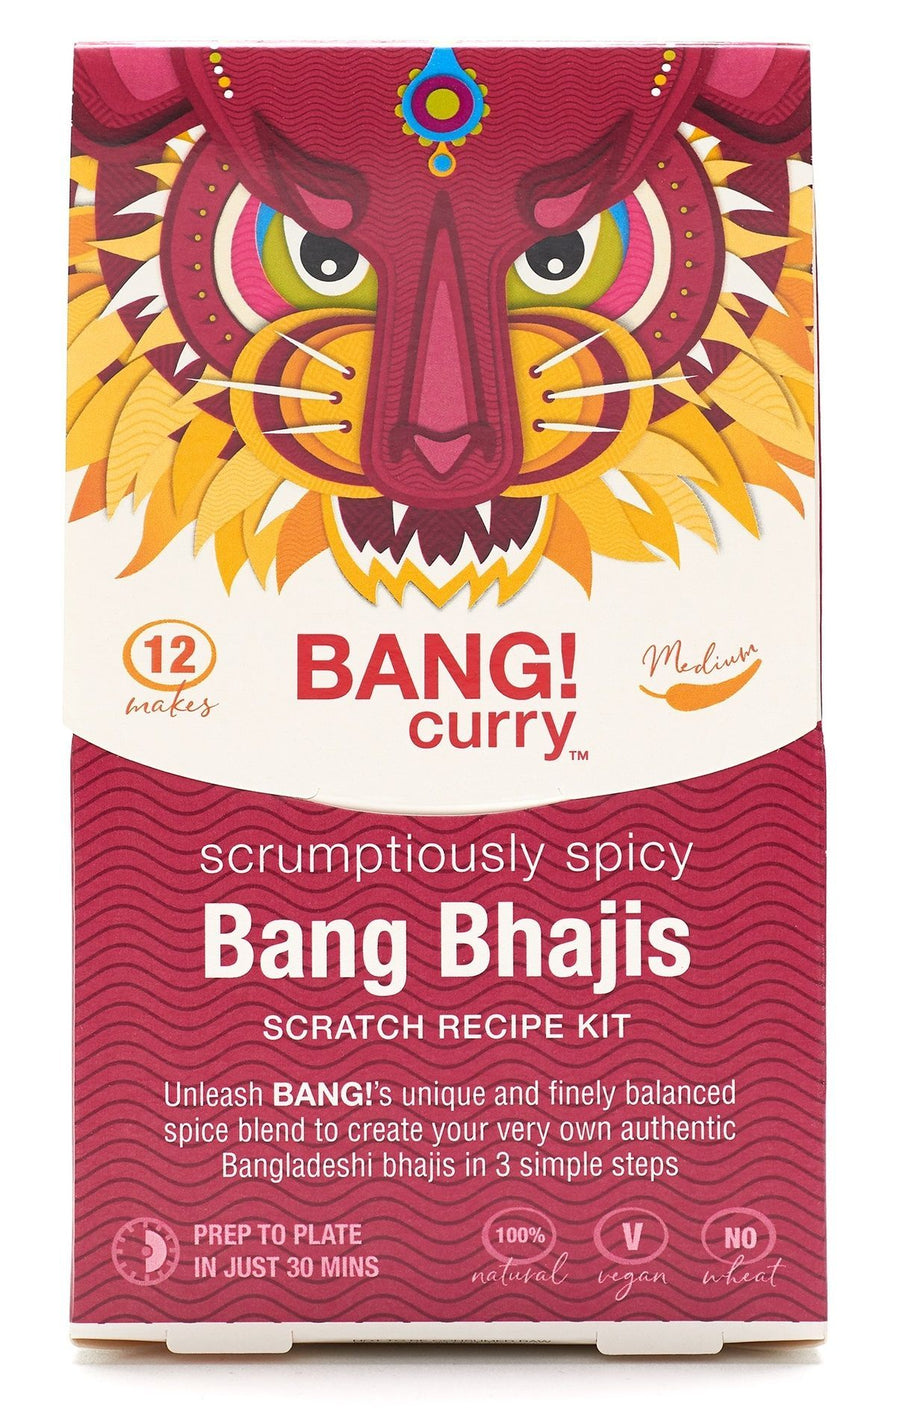 Bang Curry Bang Bhajis Recipe Kit